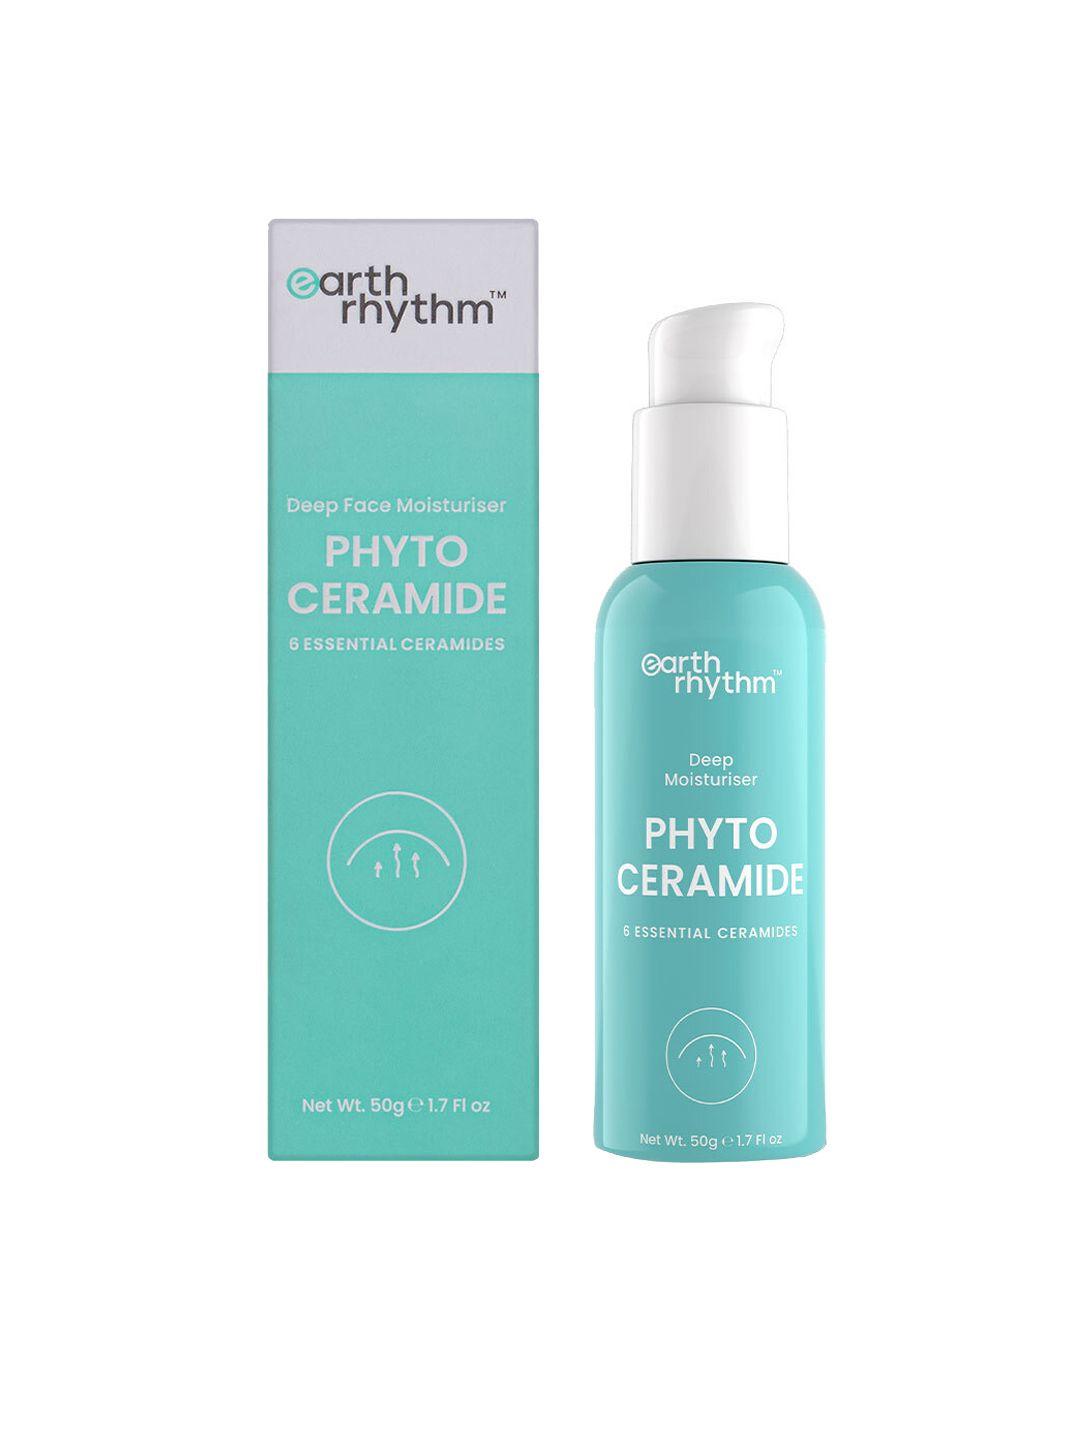 earth rhythm phyto ceramide - deep moisturiser 6 essential ceramides 1.5% hydranov - 50 ml